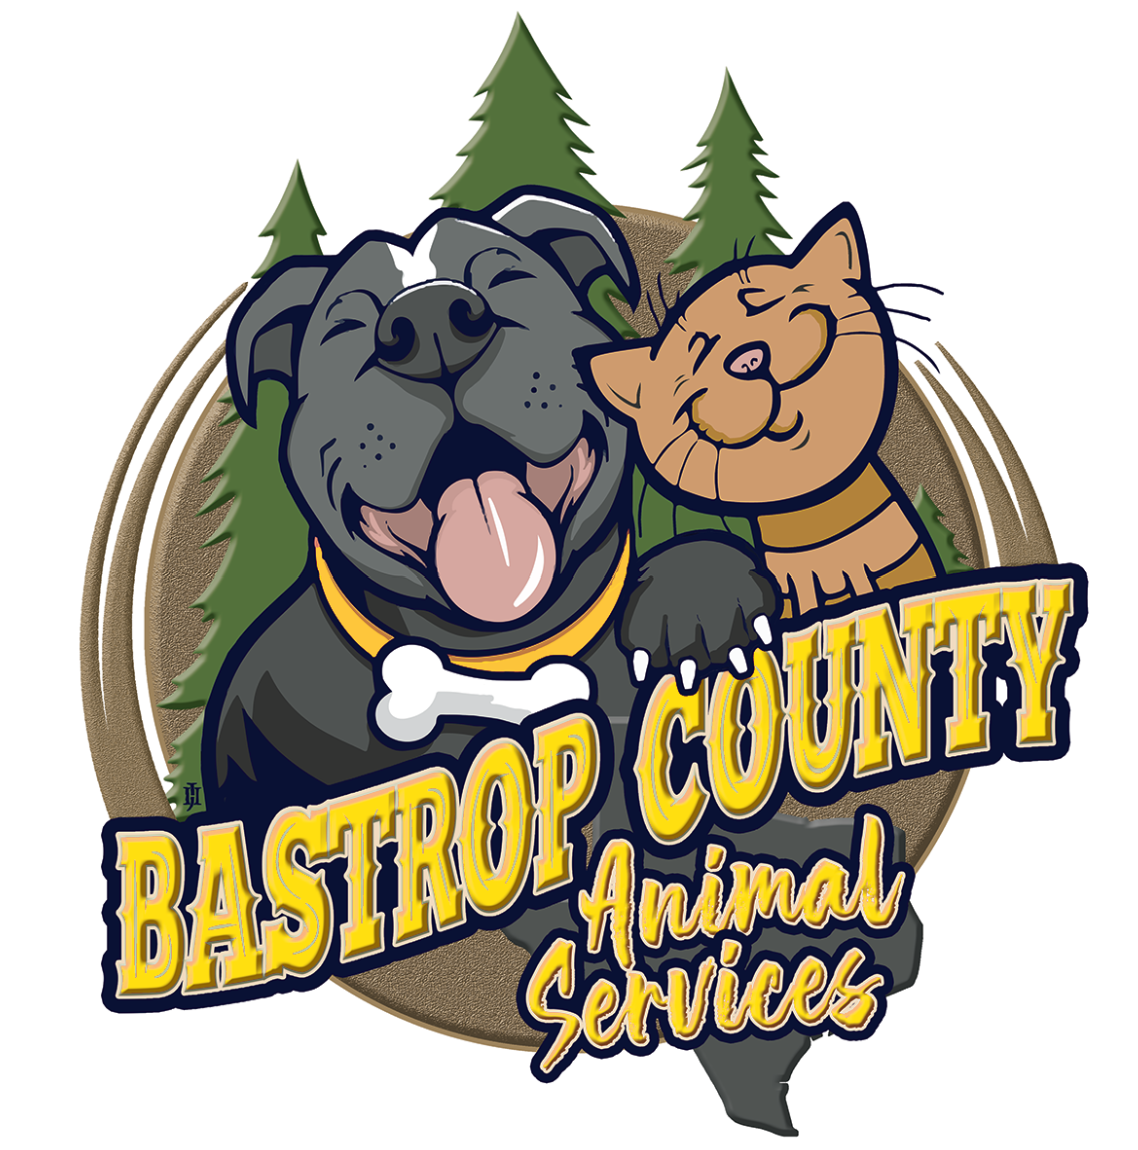 Bastrop Animal Control